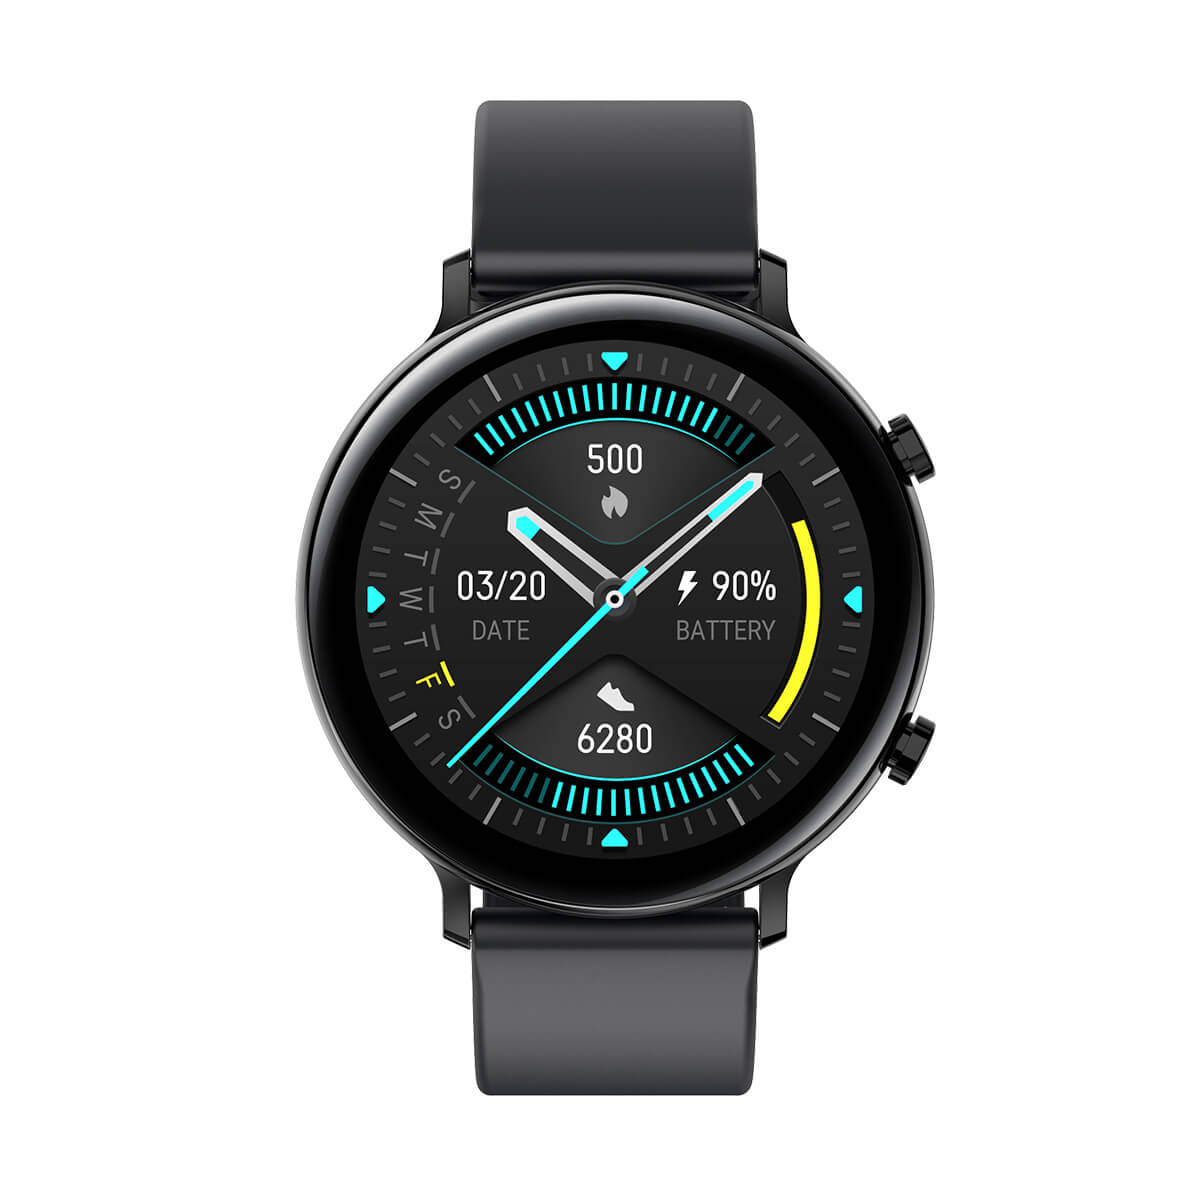 Ceas smartwatch 1.3 inch IPS Full Touch raspunsrefuz apel pasi ritm cardiac EKG oxigen notificari aplicatii apel bluetooth sporturi multiple rezistenta apa IP68 model GW33 10